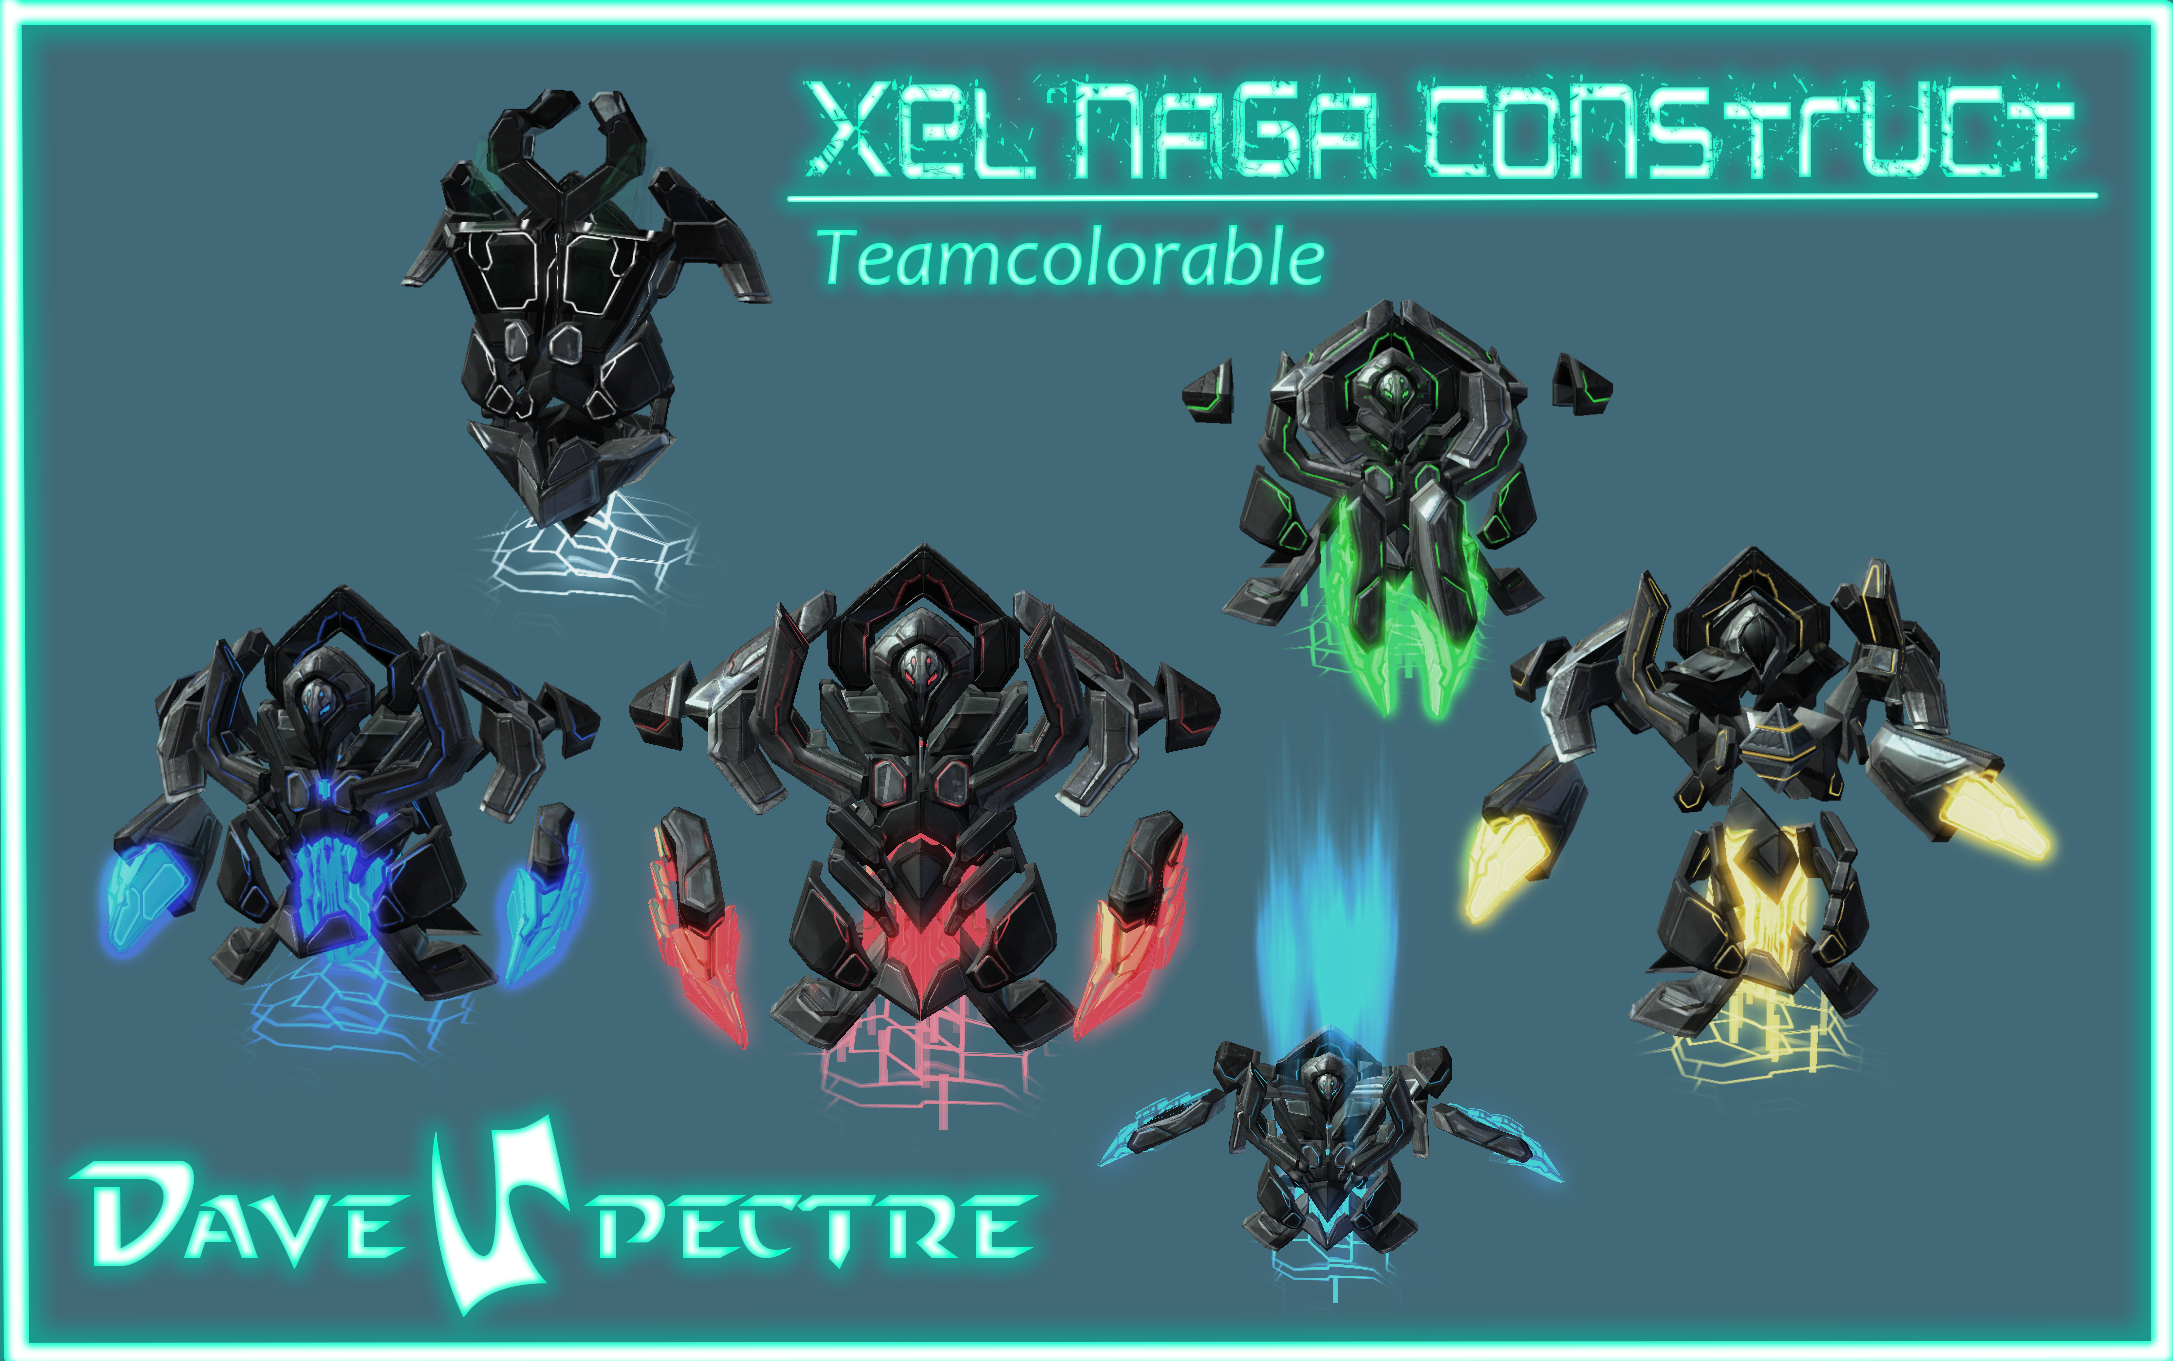 Teamcolorable Xel'naga Construct